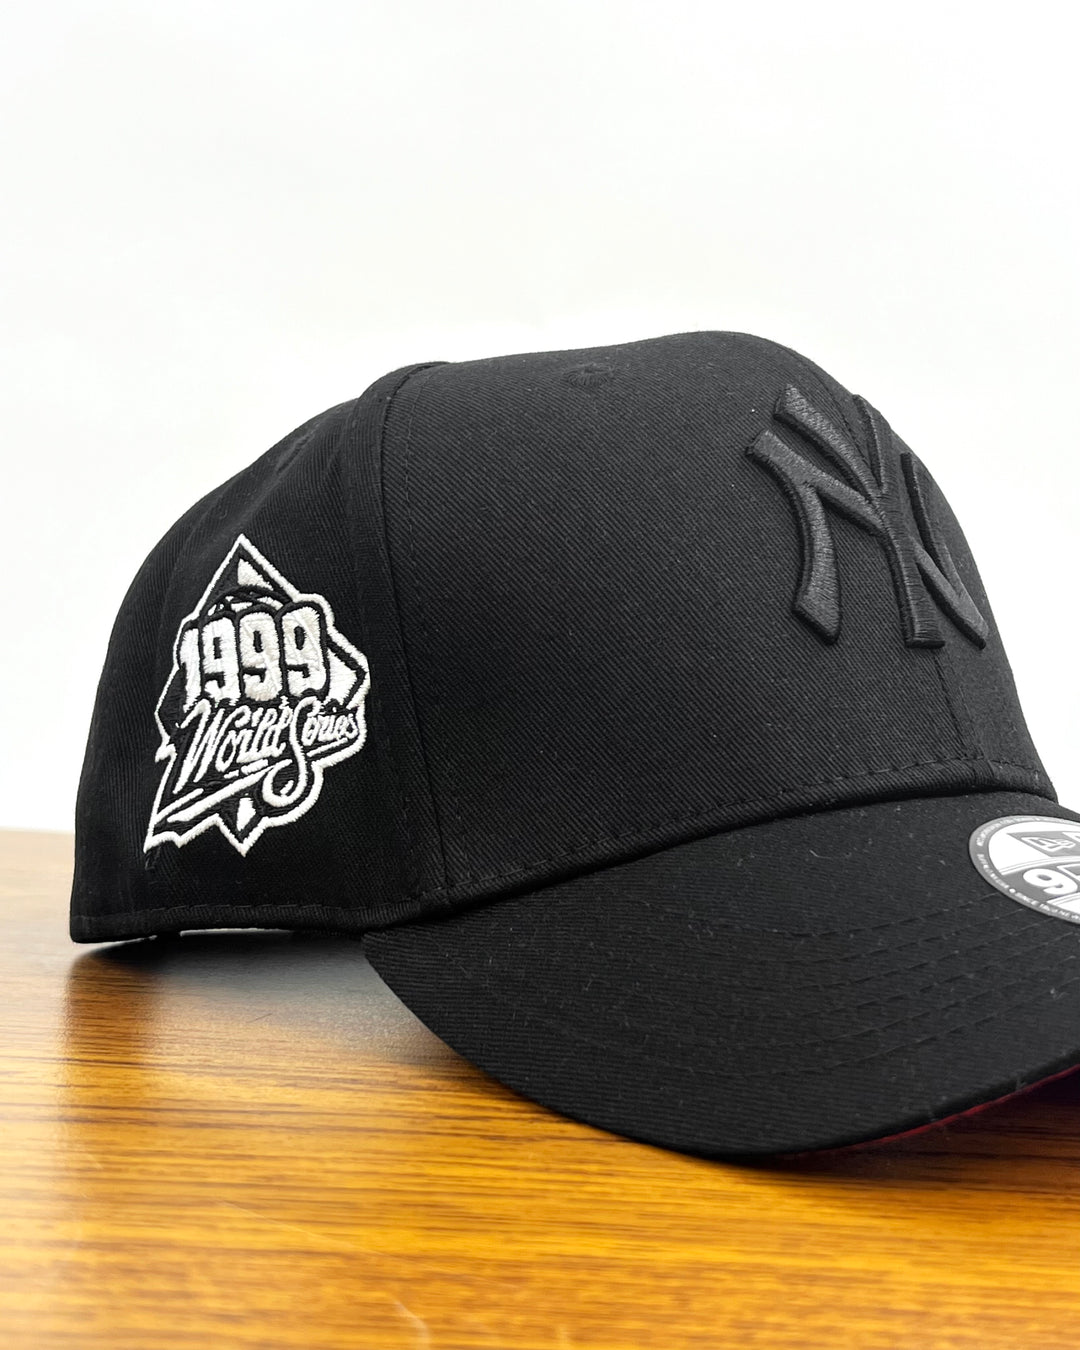 New York Yankees 9FIFTY World Series Snapback Cap in black